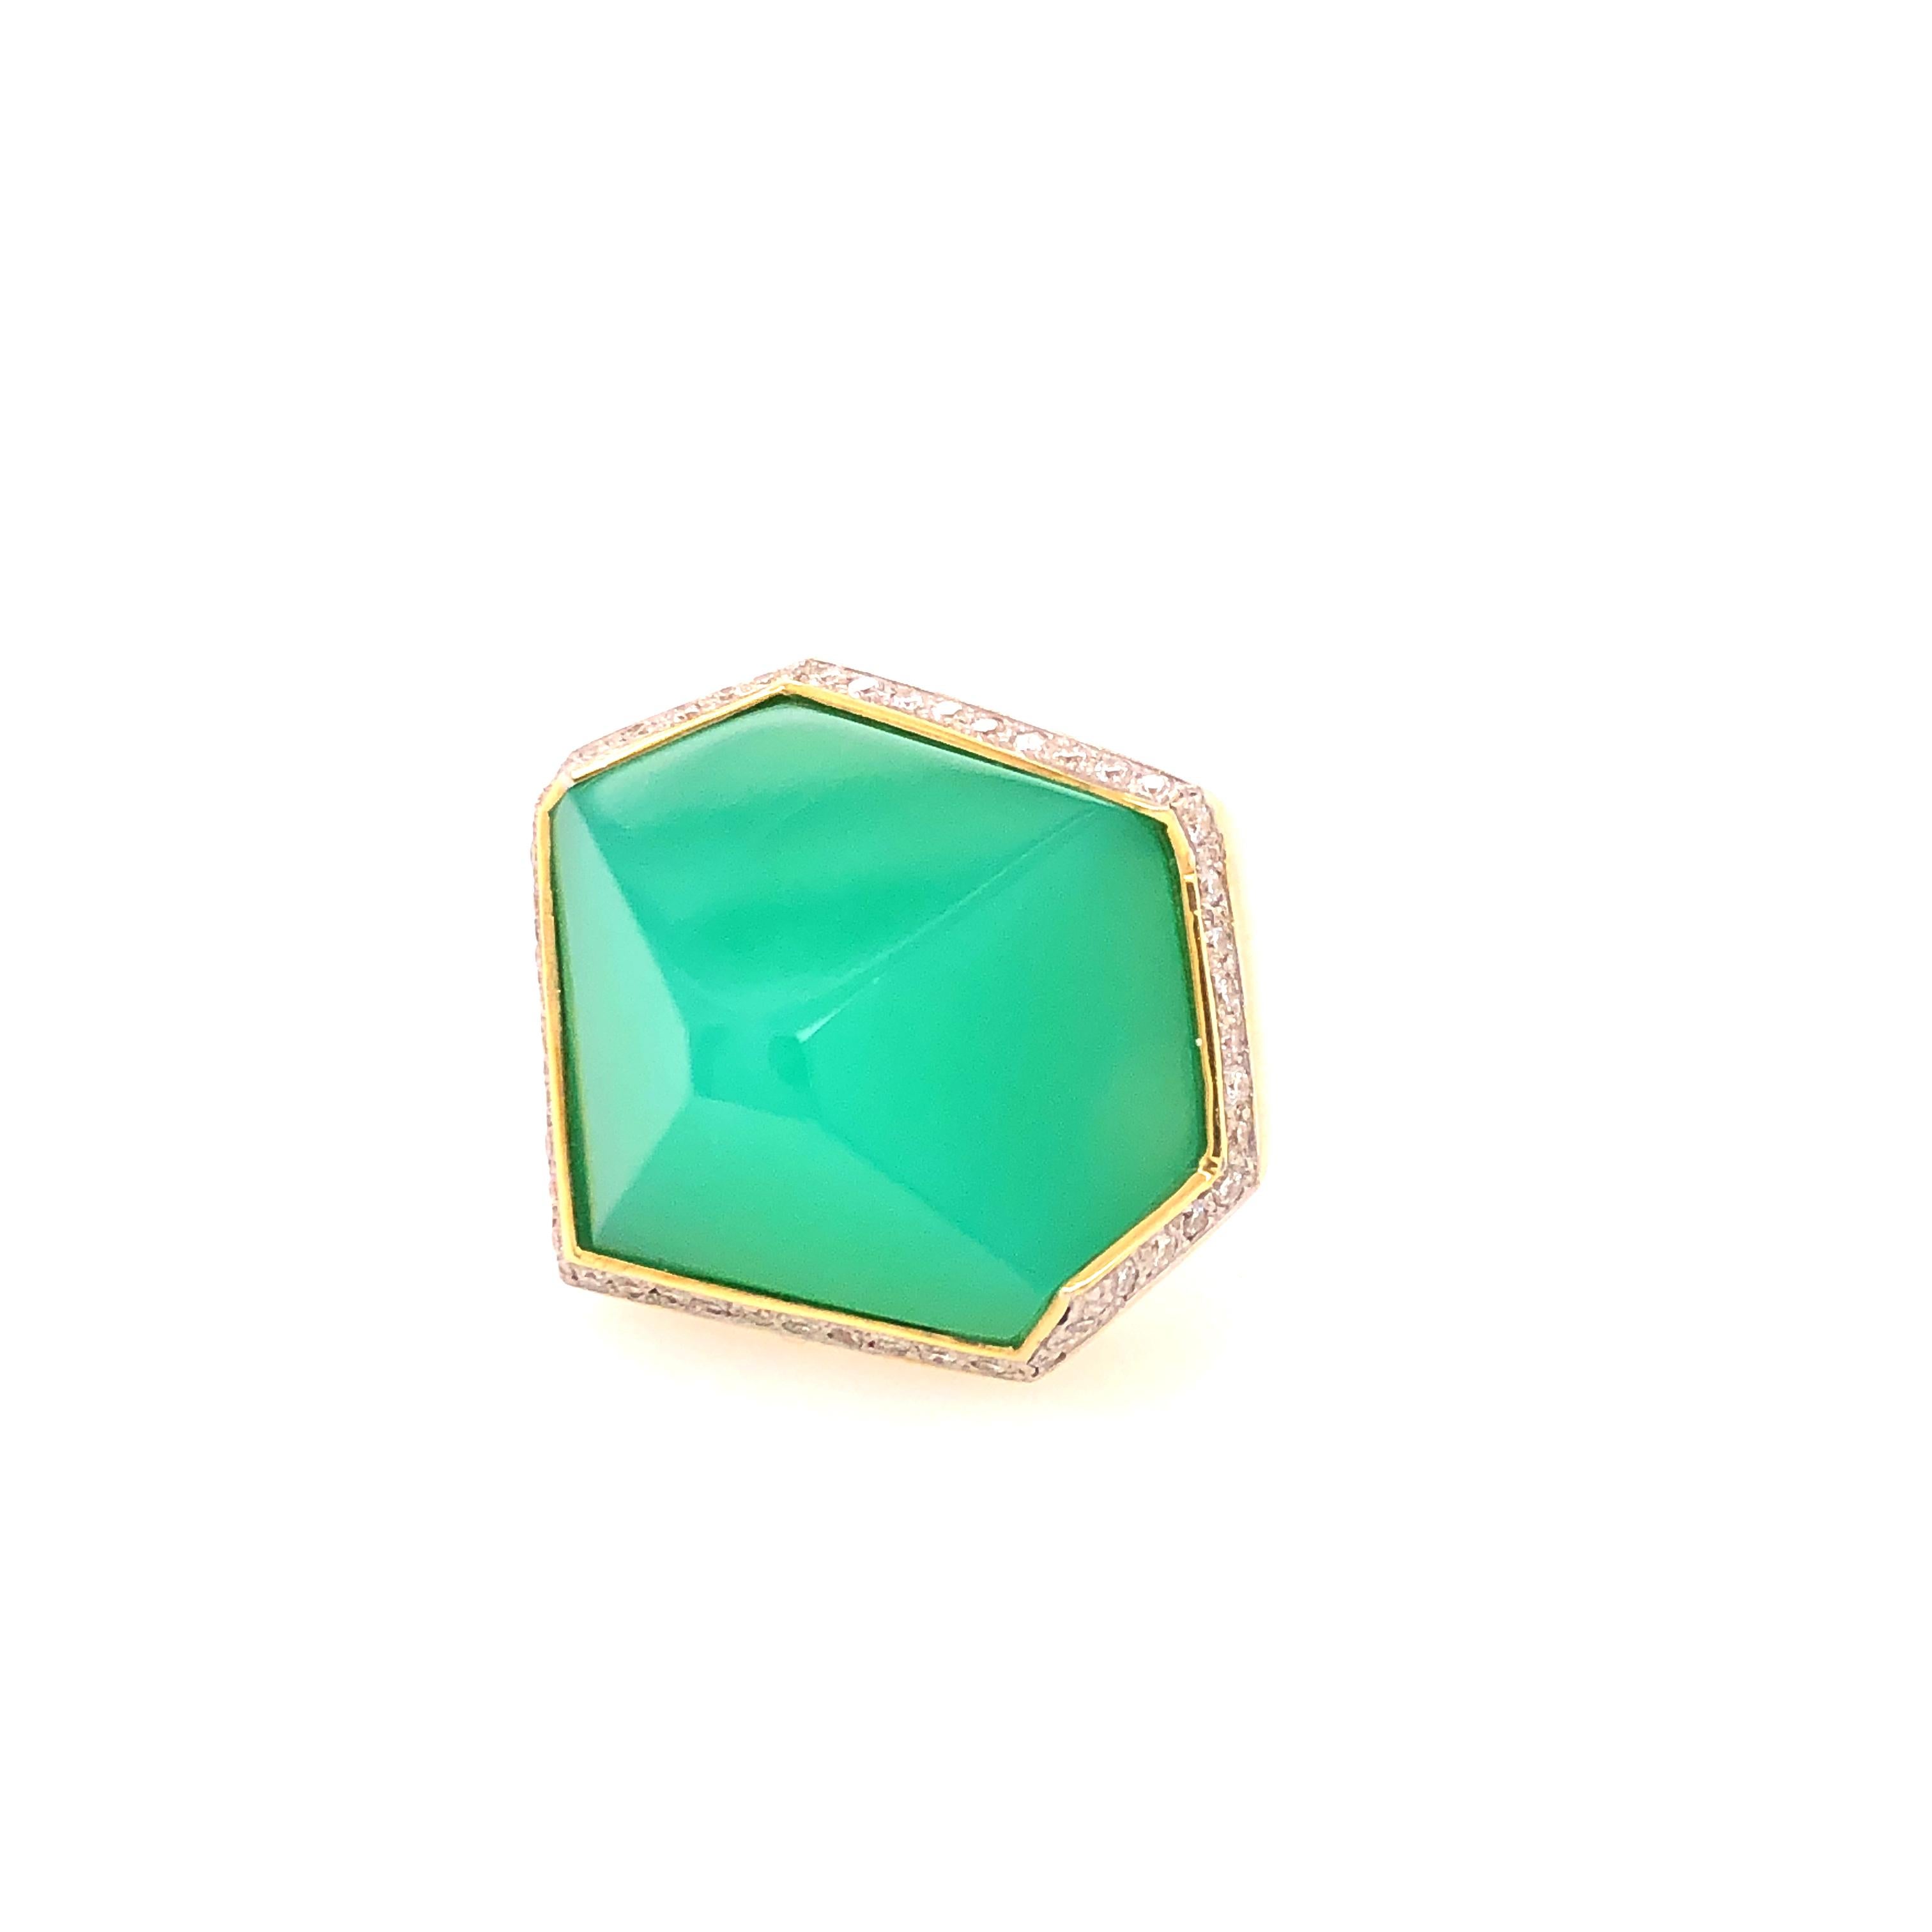 Valerie Naifeh 17.36 Carat Green Chrysoprase Diamond Ring 3